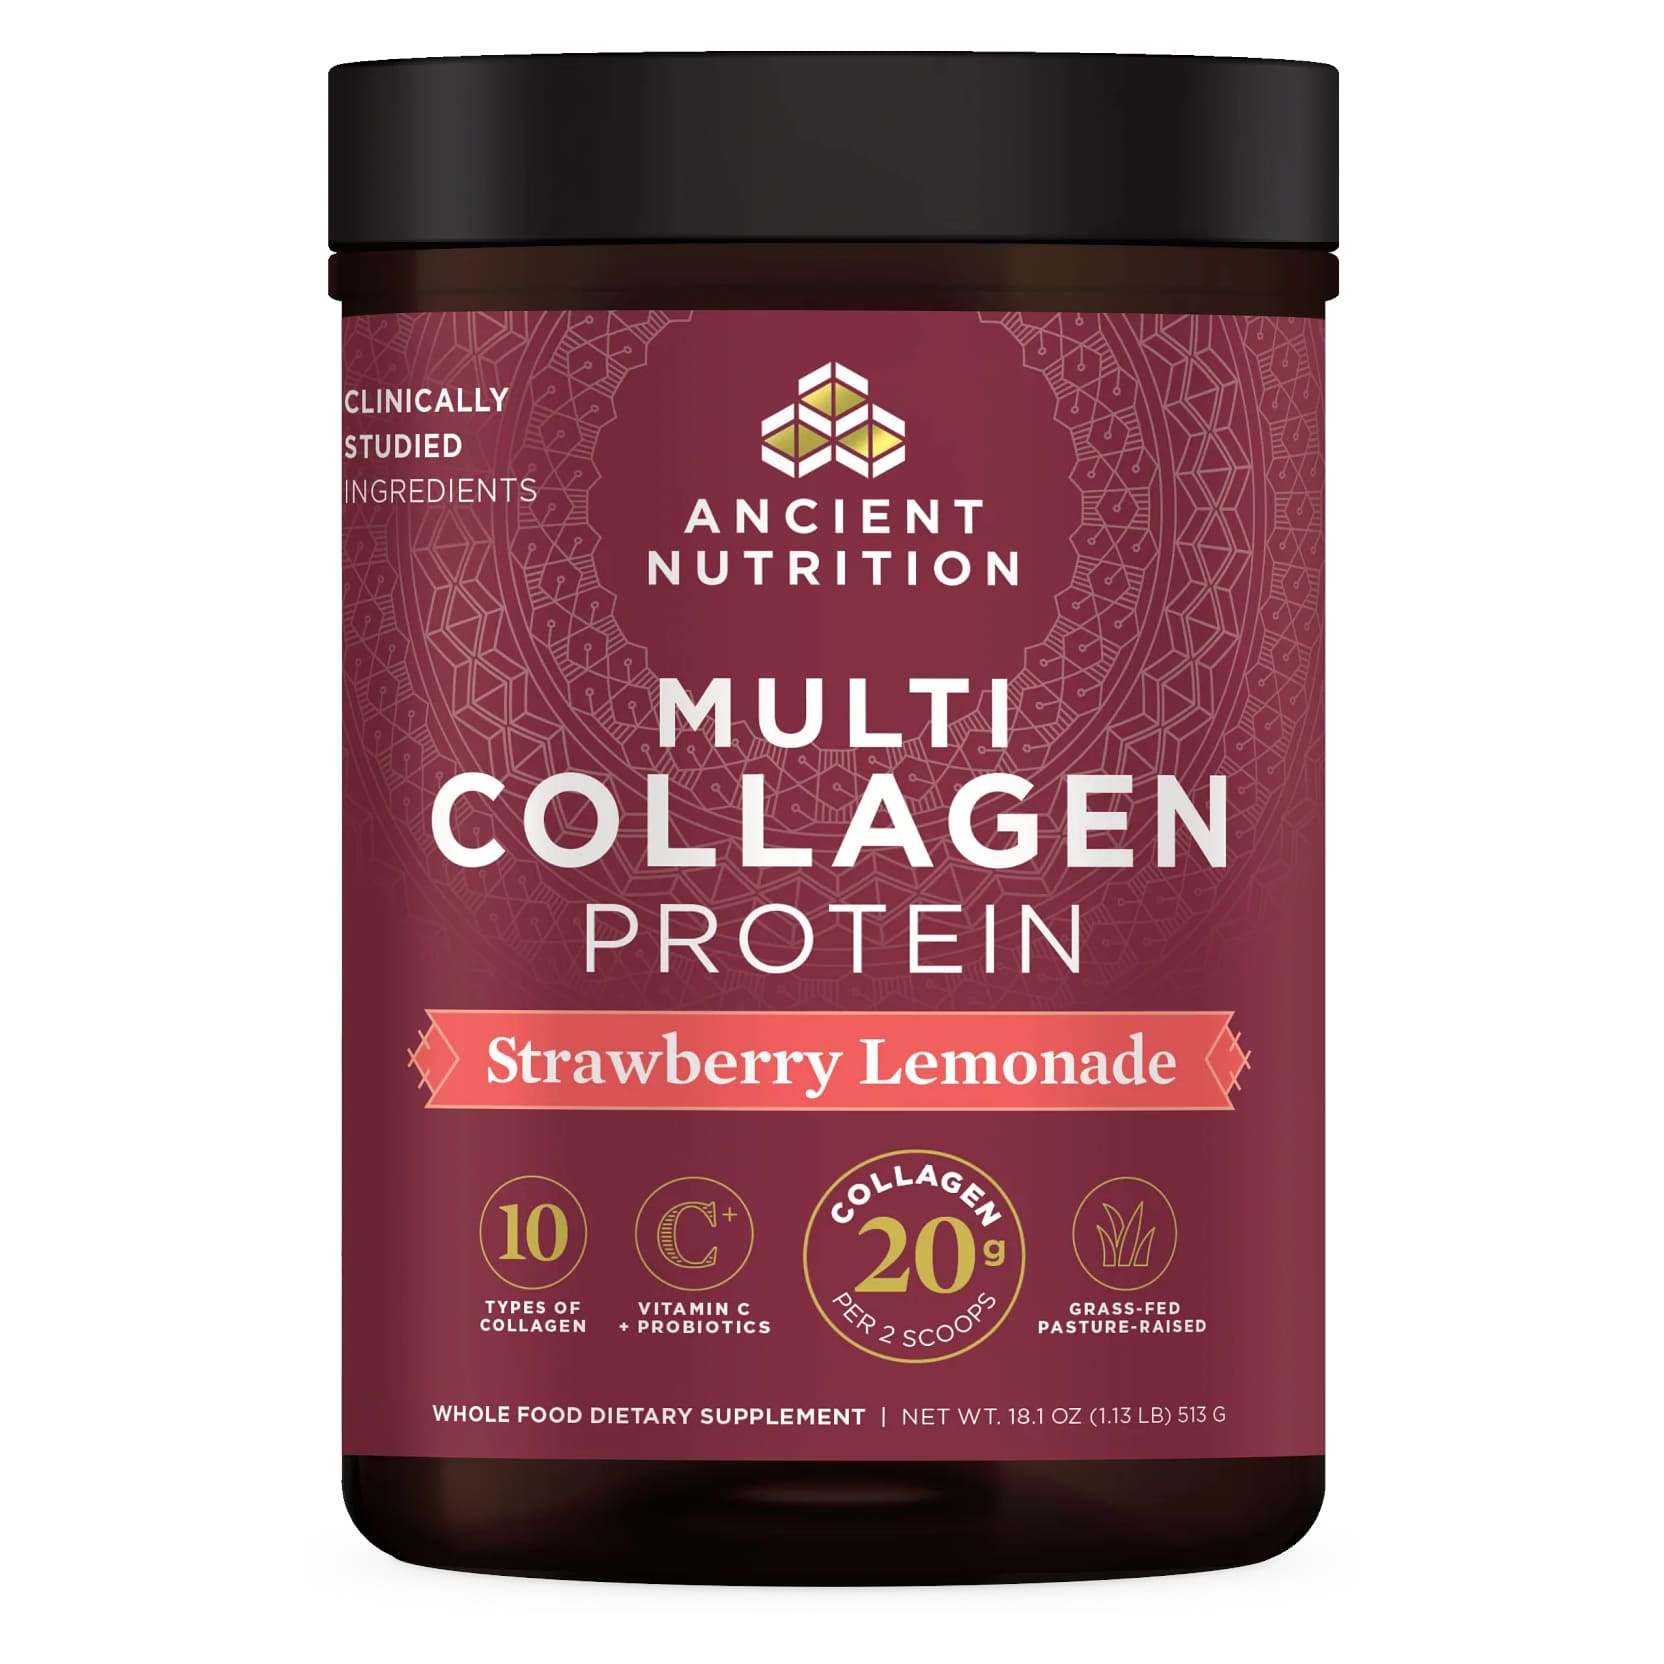 цена Коллаген Ancient Nutrition Multi Protein 10 Types Vitamin C + Probiotics Strawberry Lemonade, 513 г